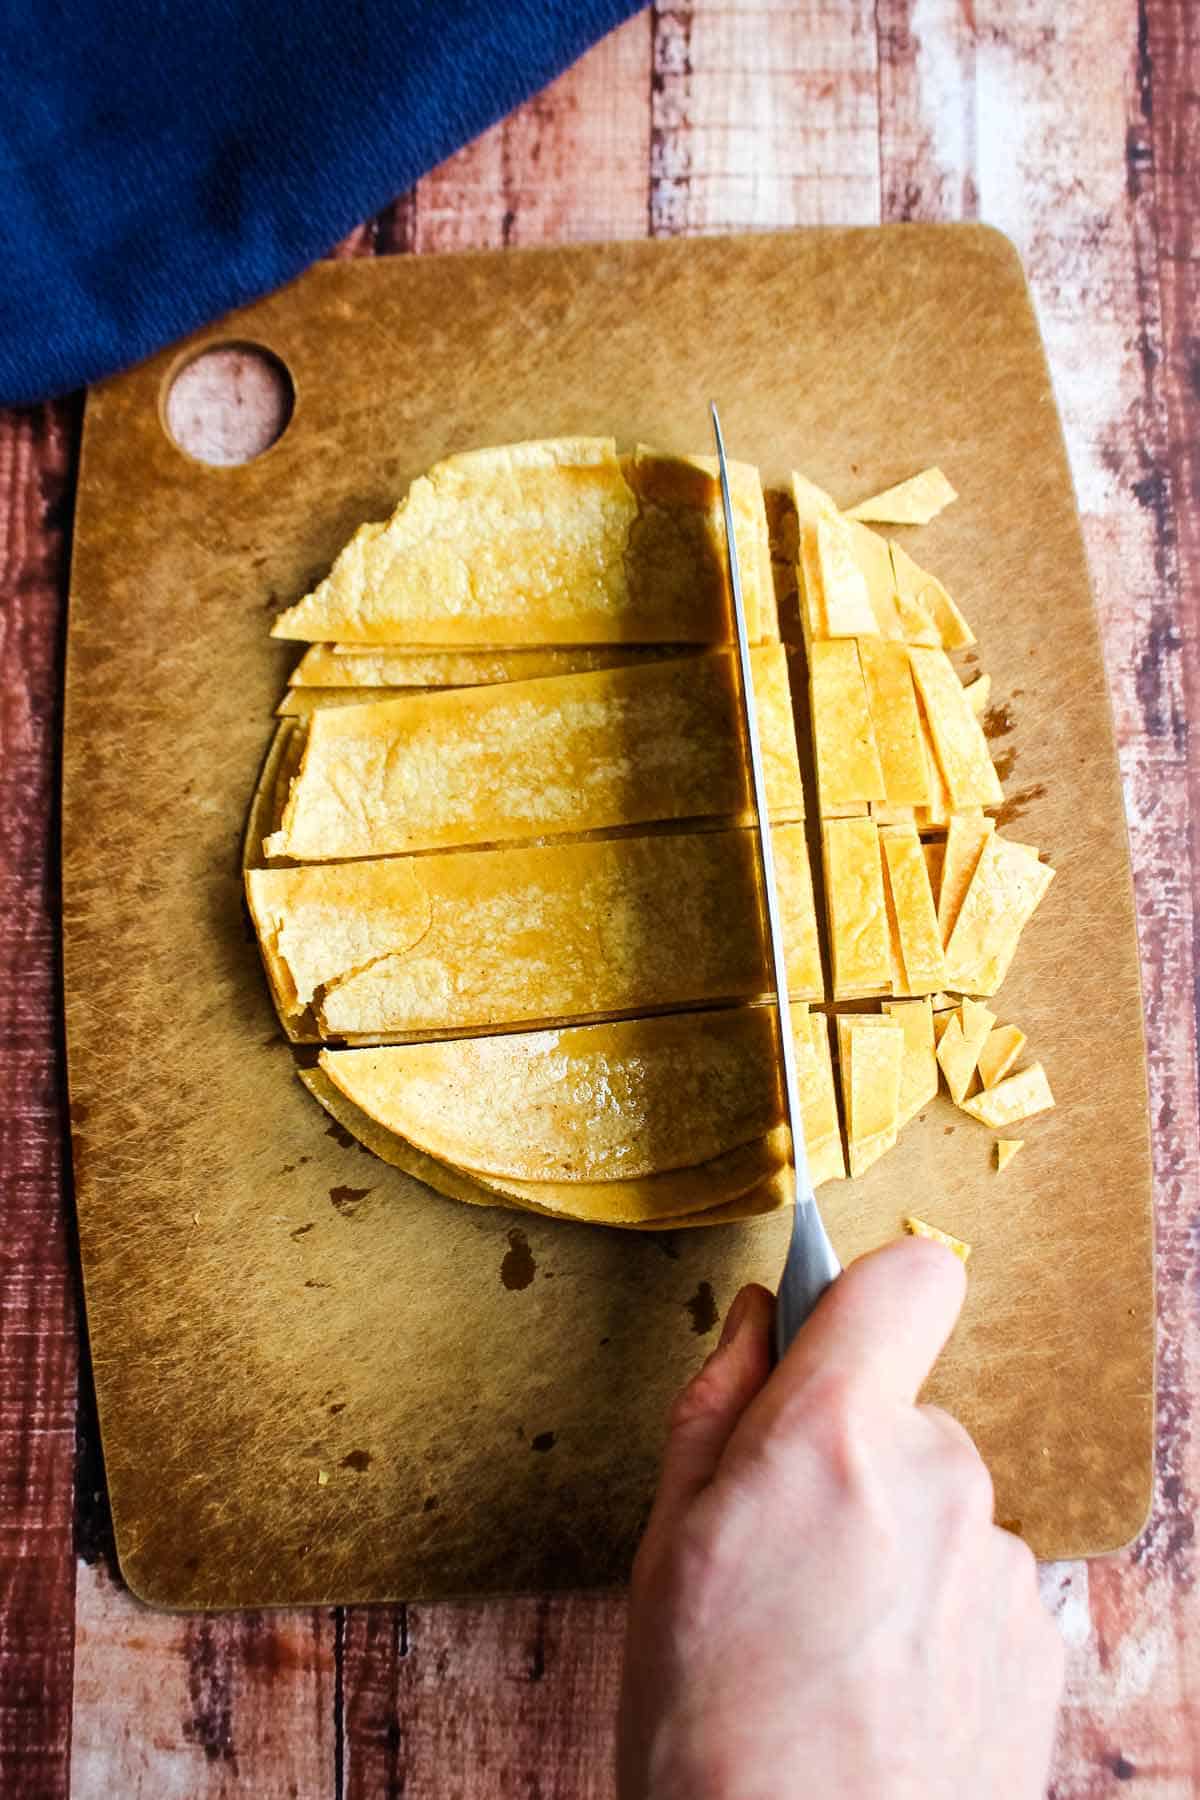 Cutting the tortillas on a cutting board.